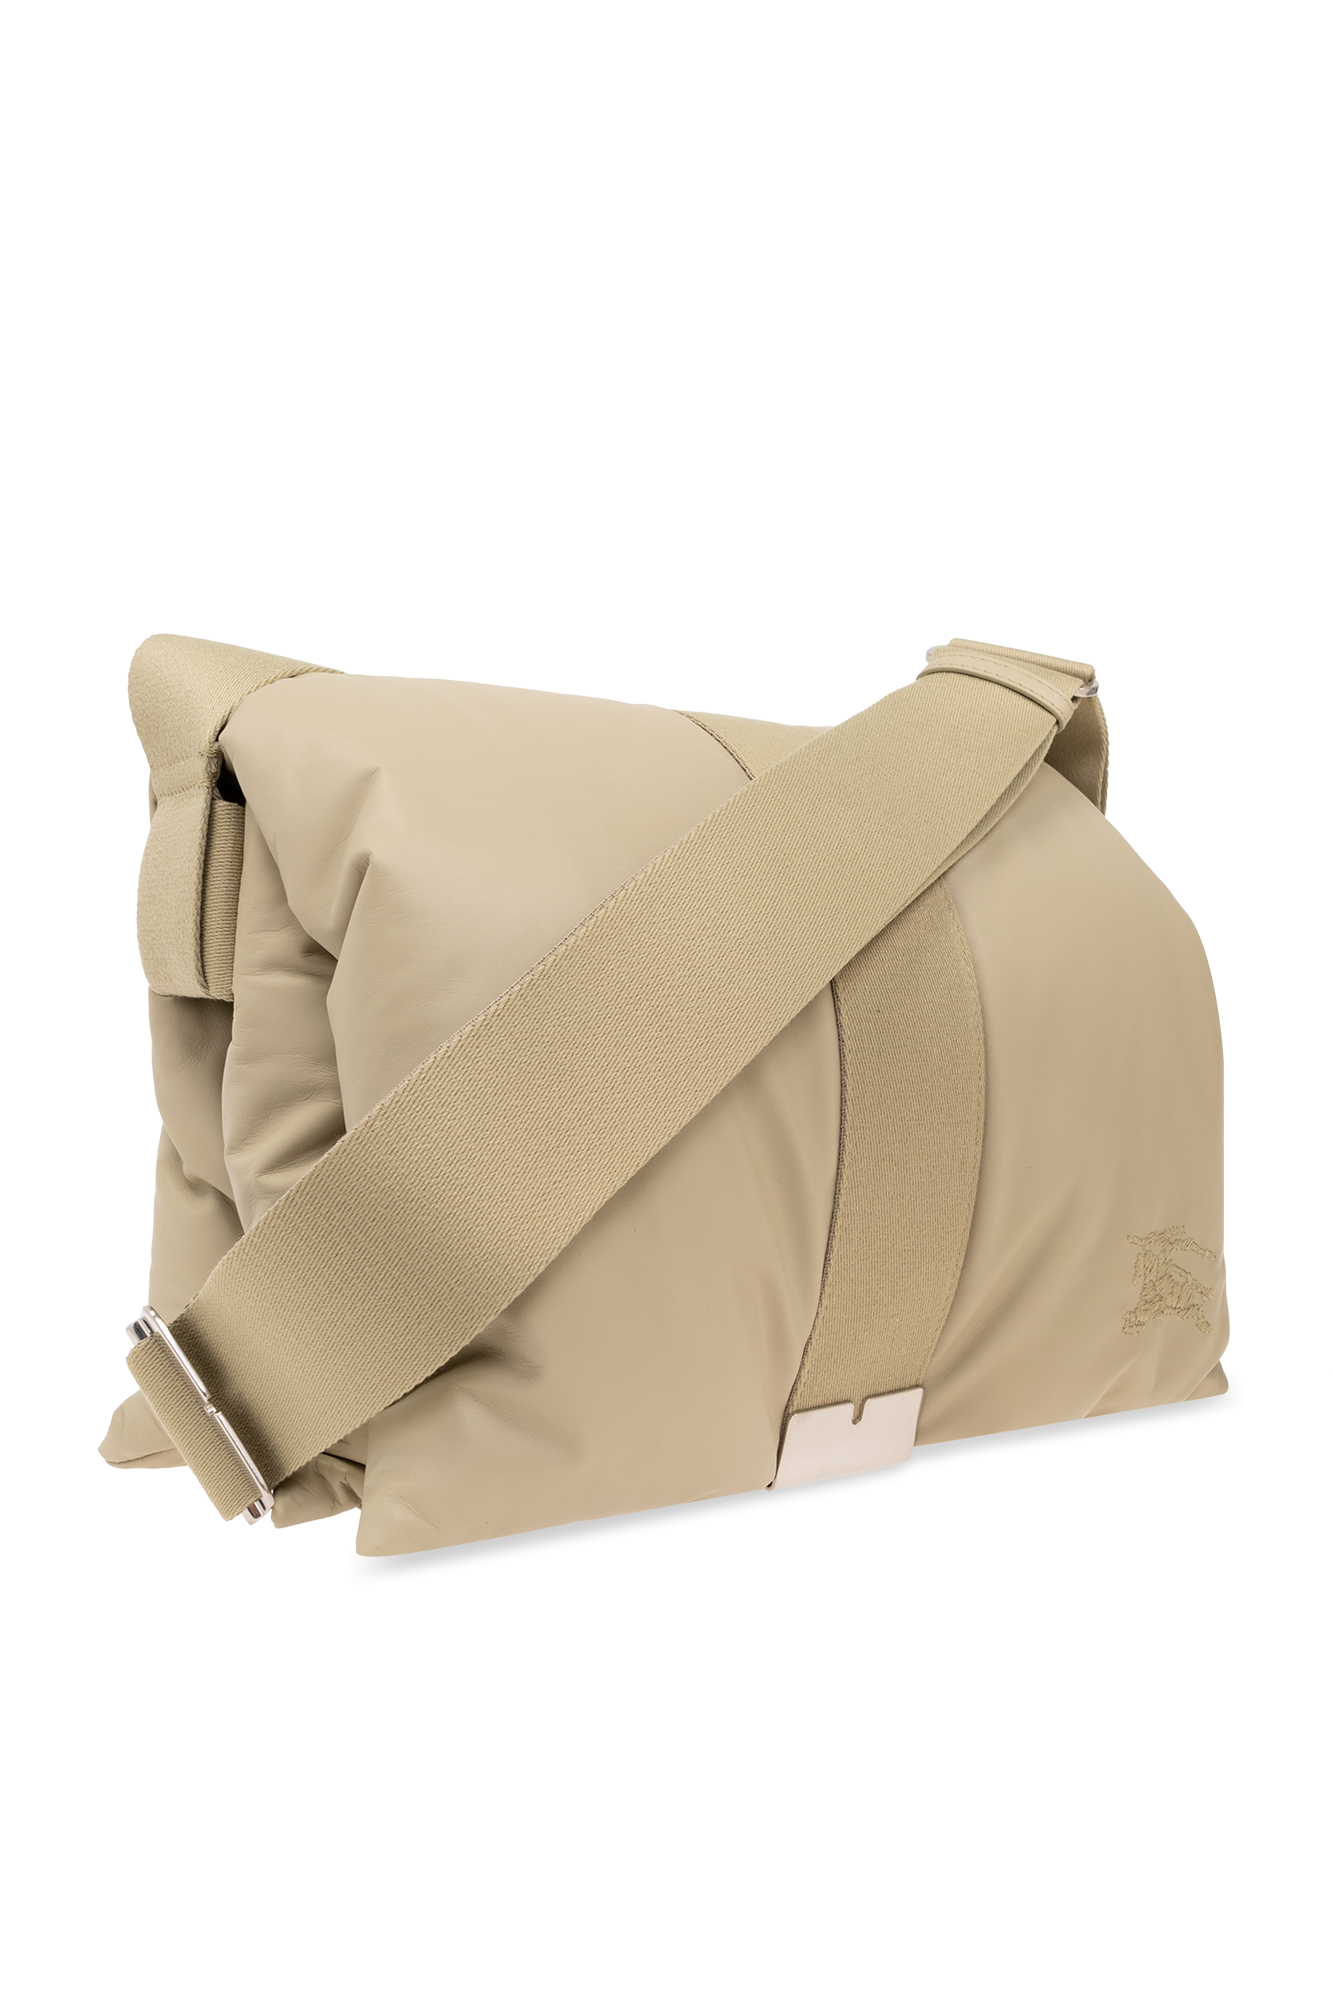 Burberry ‘Pillow’ shoulder bag